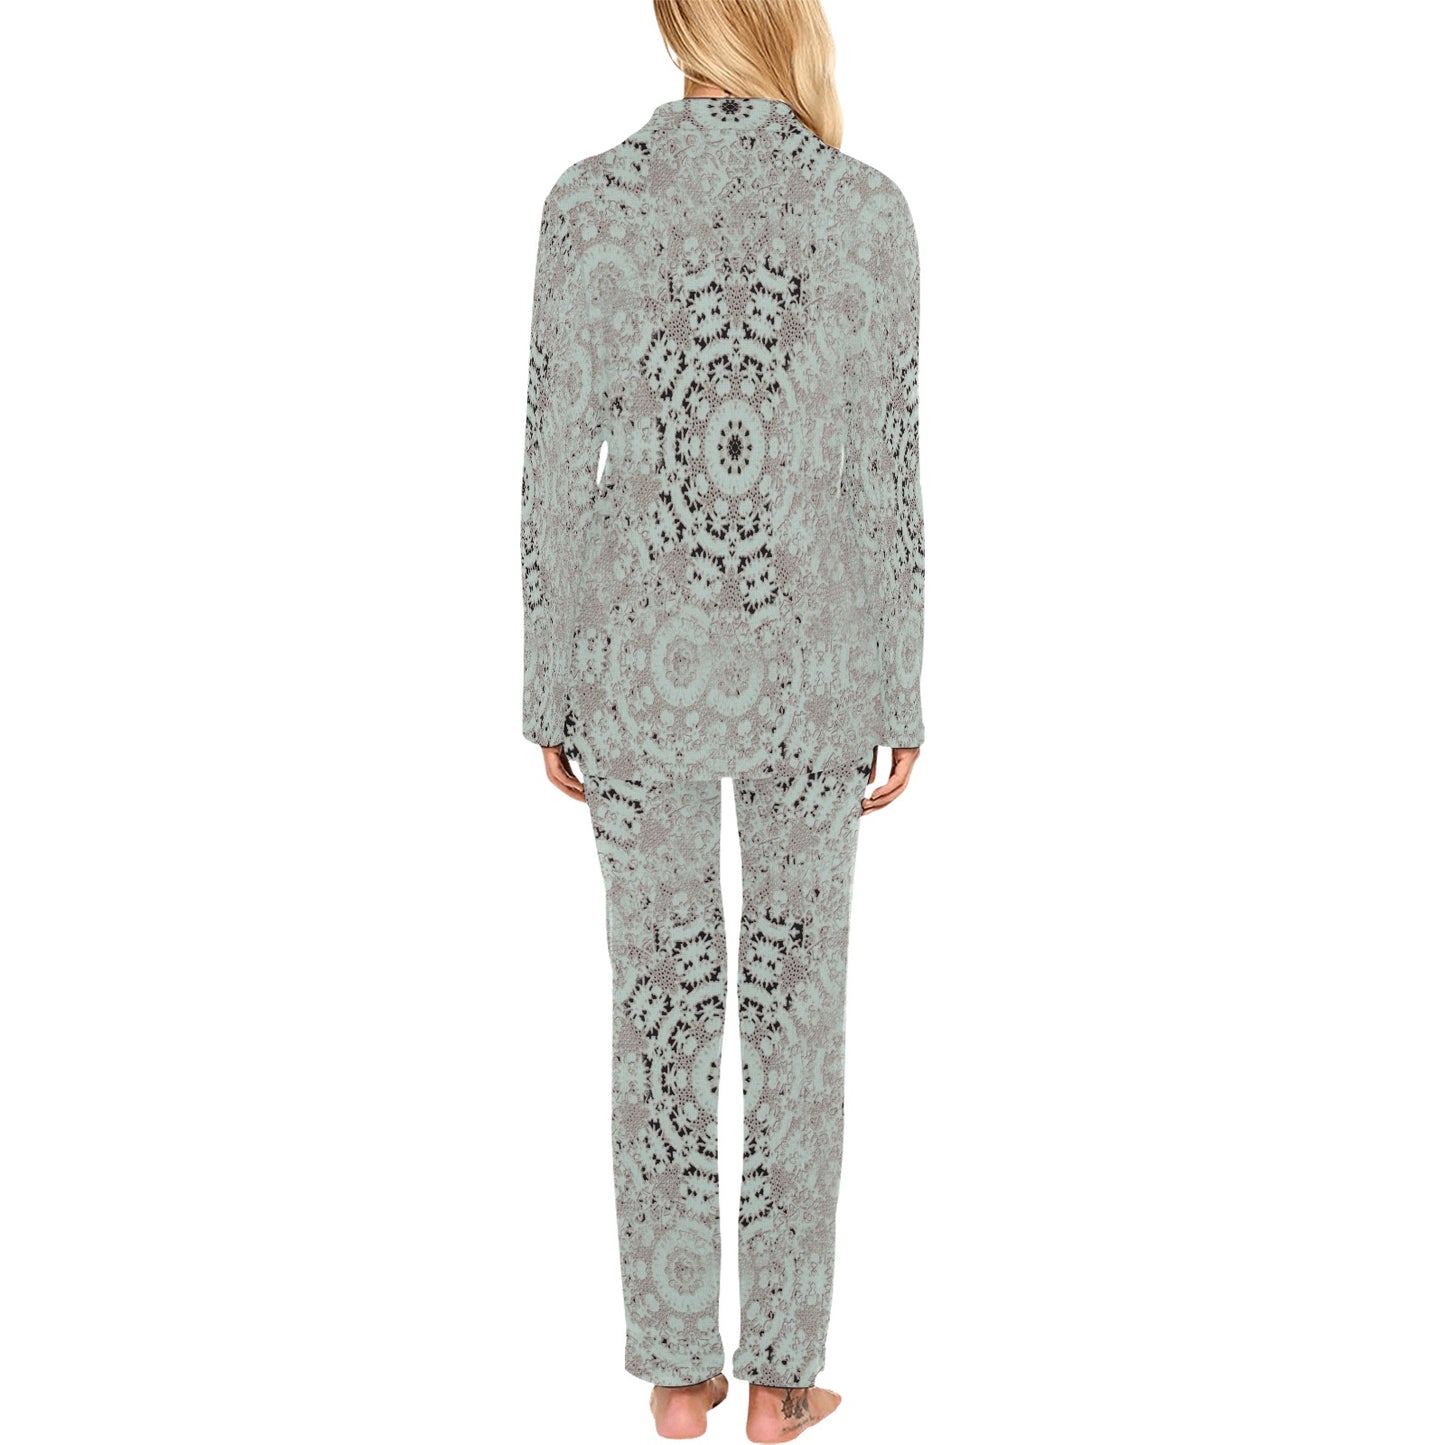 Victorian printed lace pajama set, design 51 Women's Long Pajama Set (Sets 02)